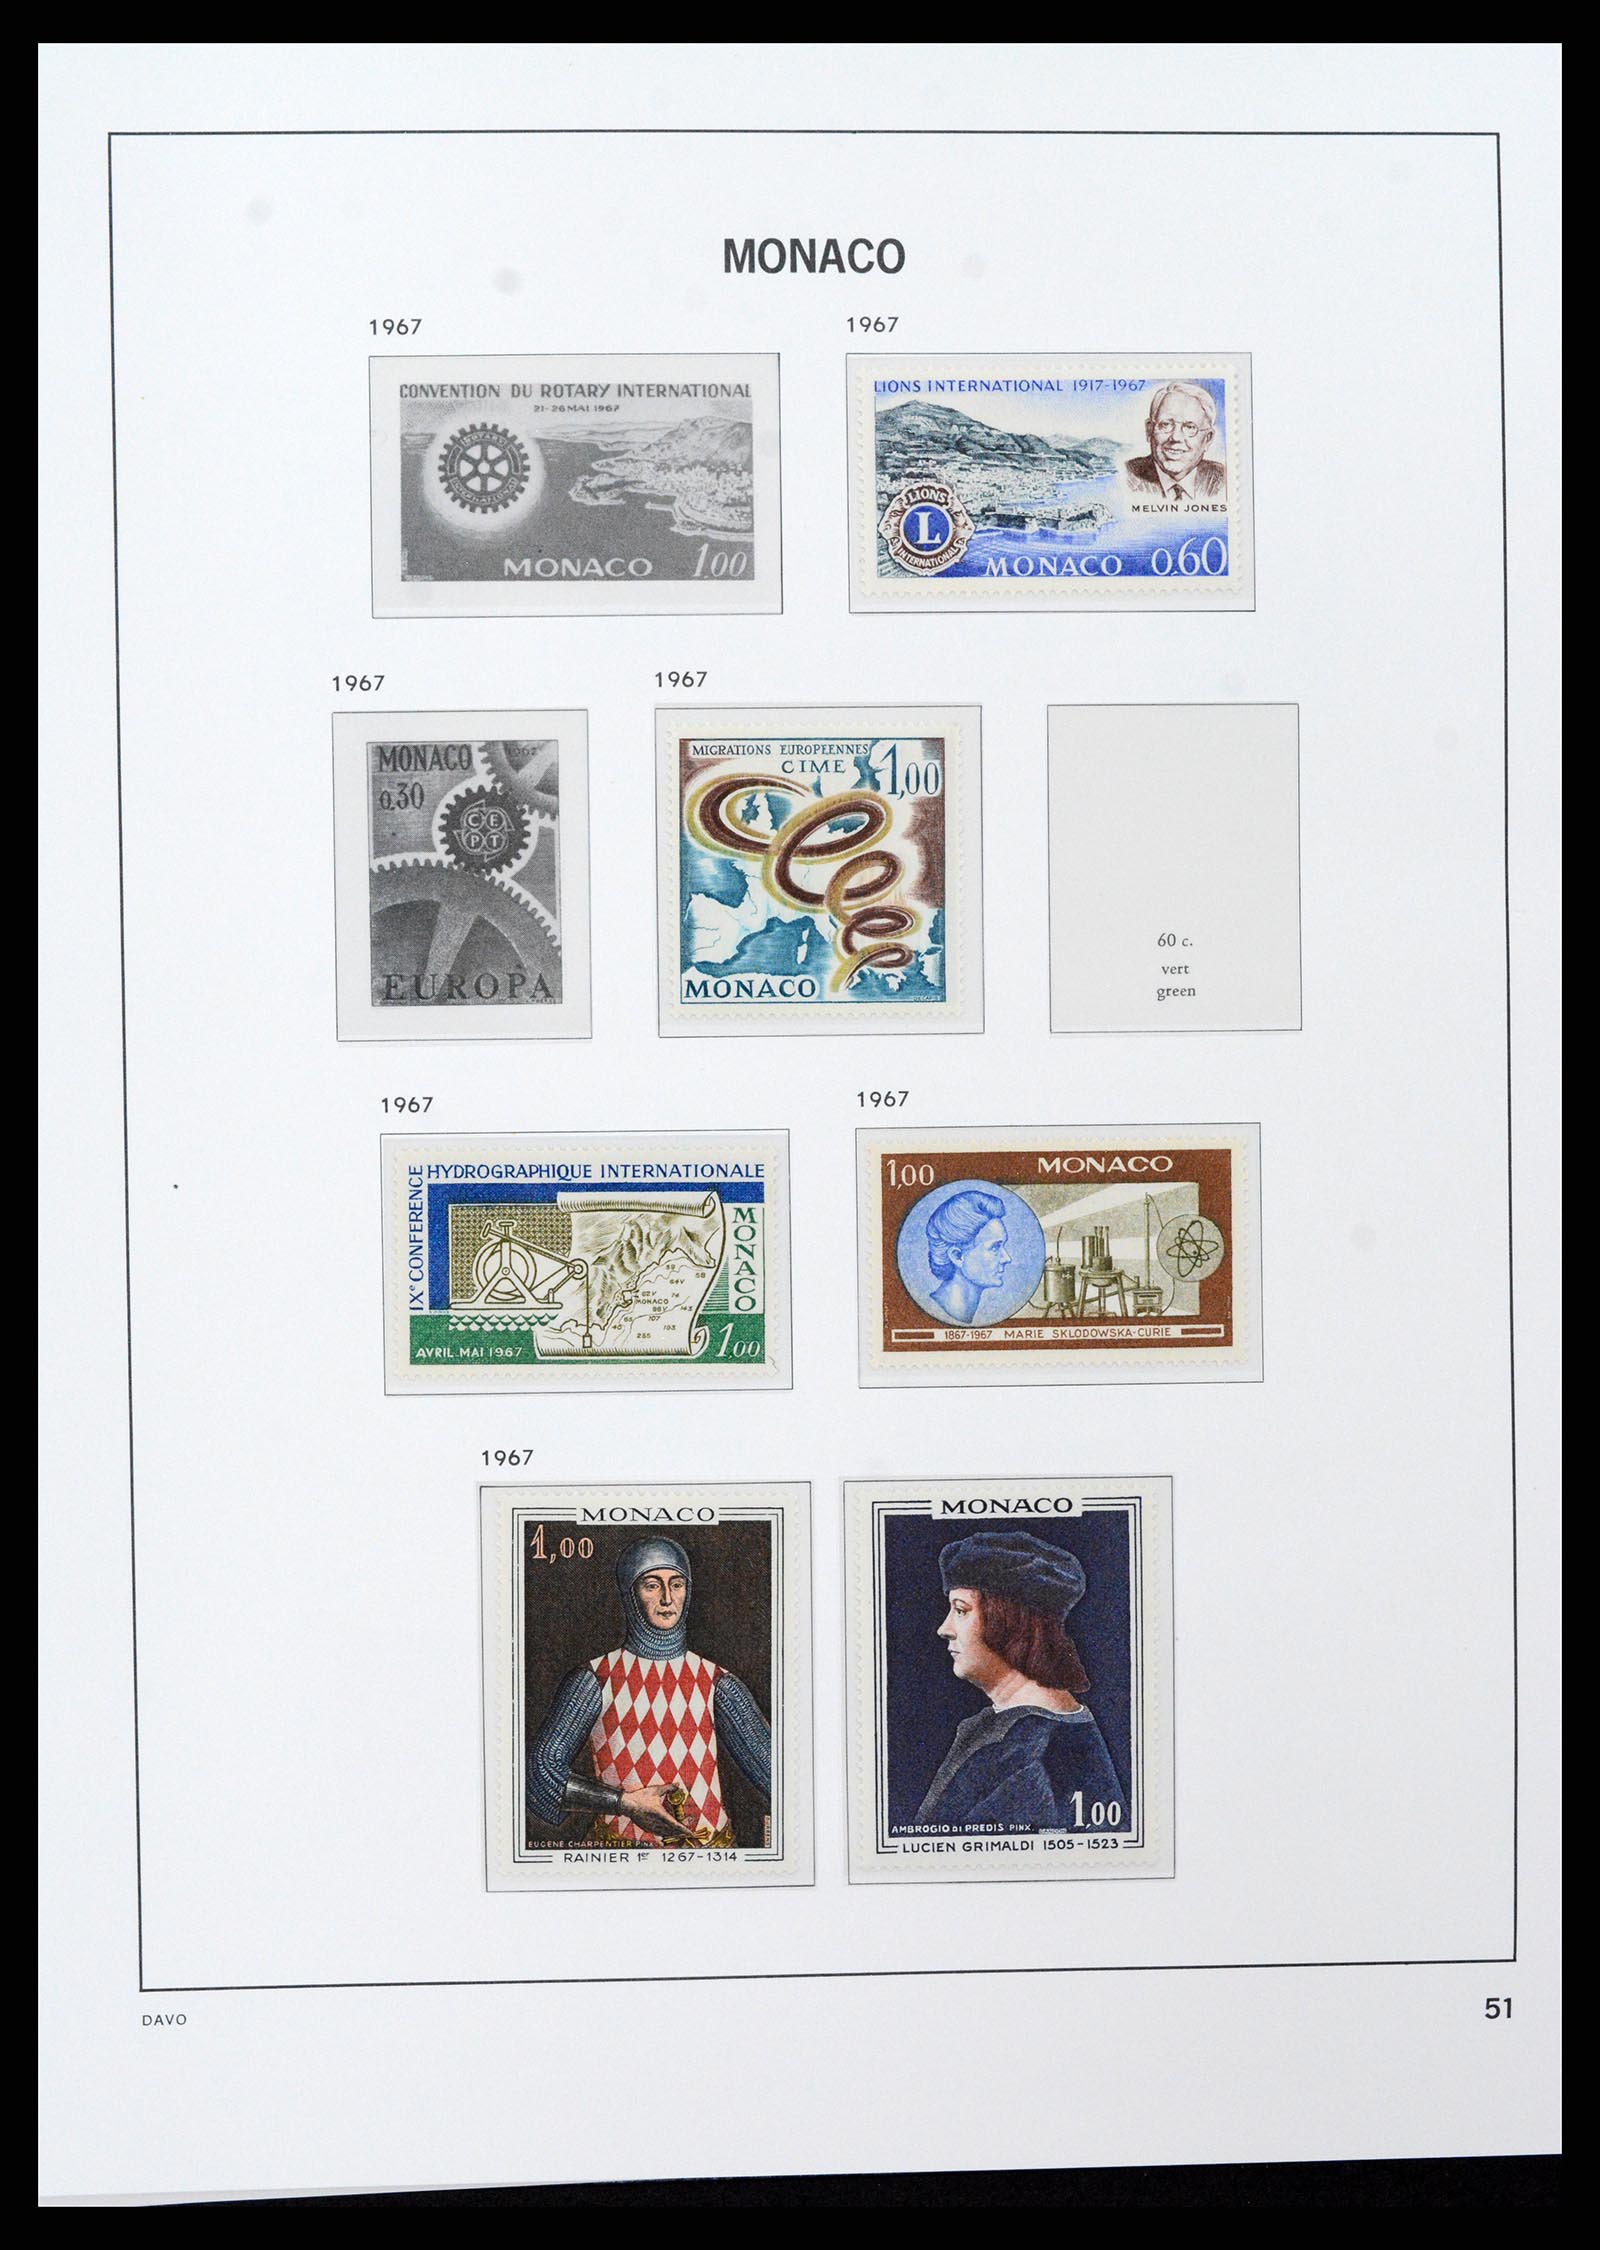 37279 051 - Stamp collection 37279 Monaco 1885-1969.